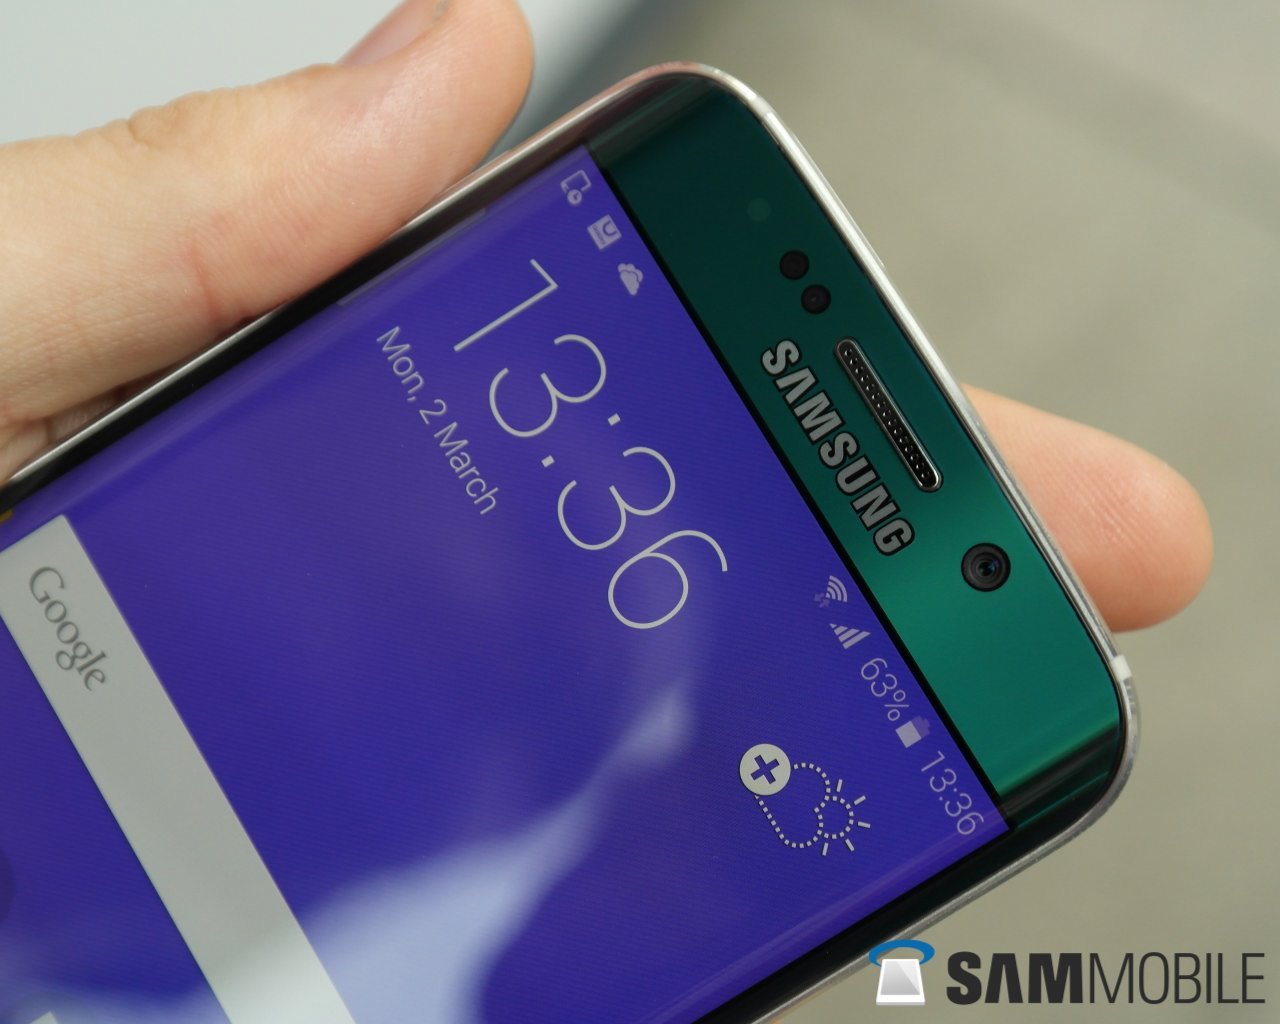 Universiteit wees onder de indruk Vochtig Samsung Galaxy S6 edge - SamMobile